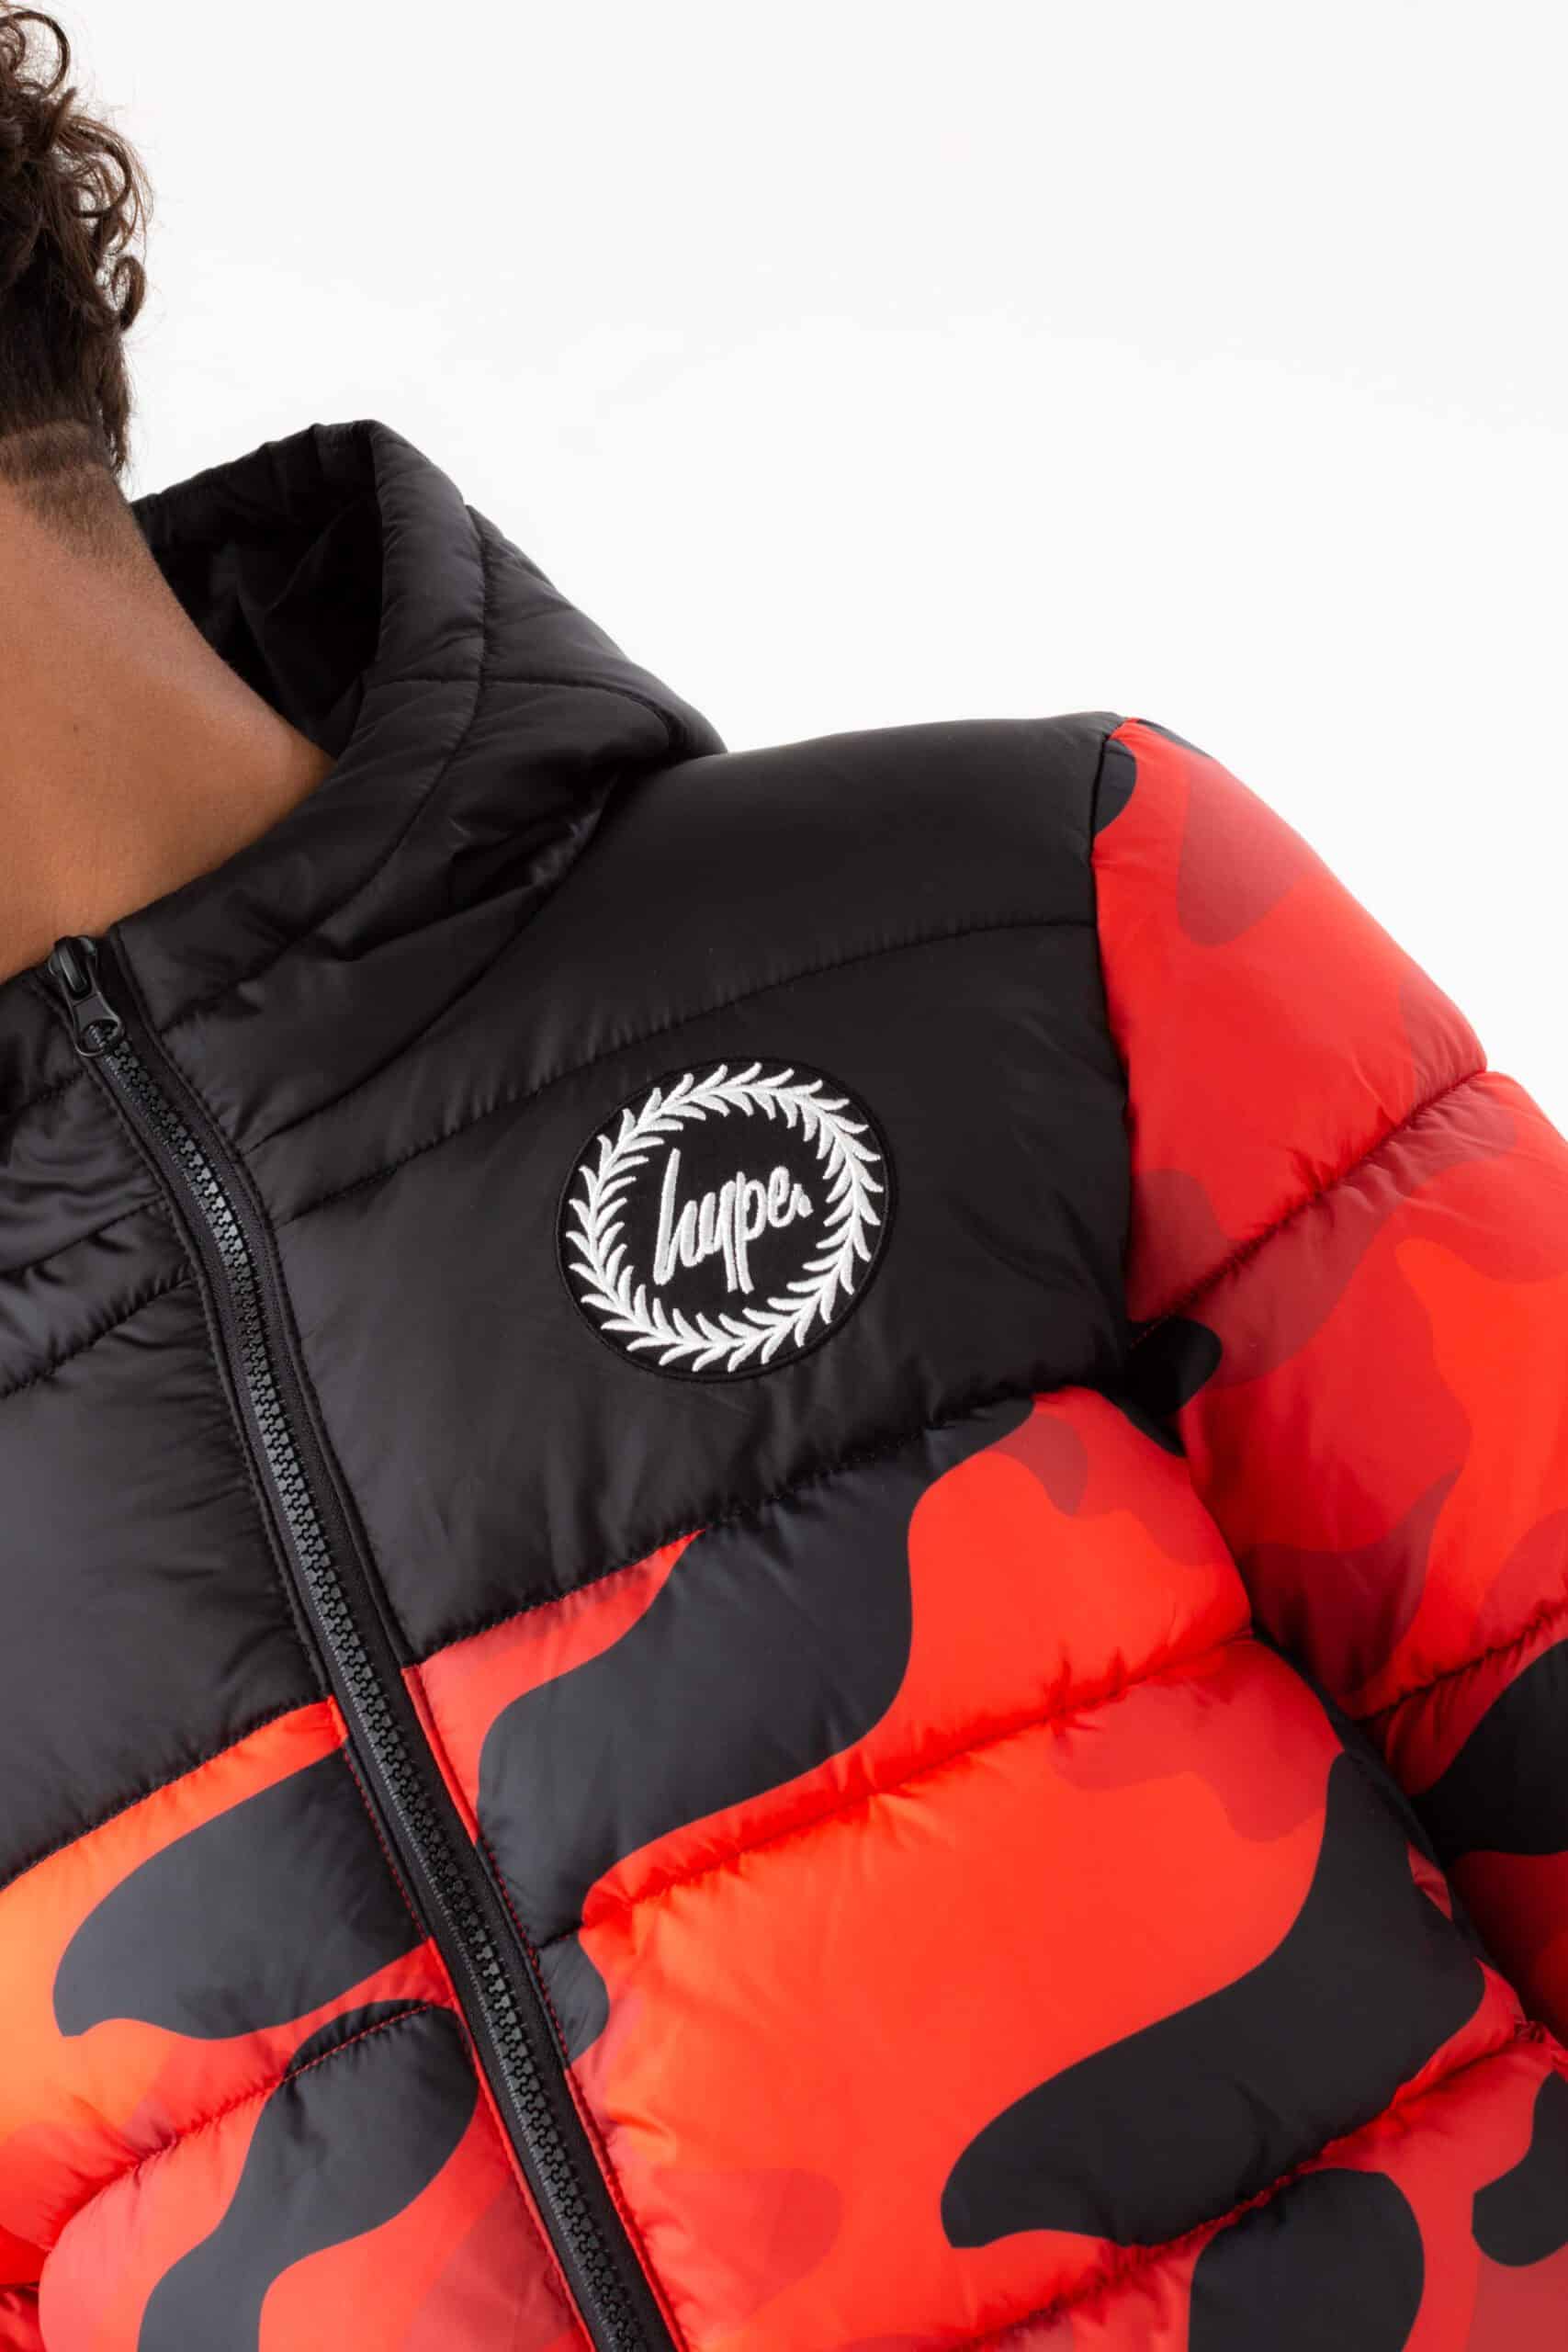 hype boys orange and black camo puffer jacket close up of logo